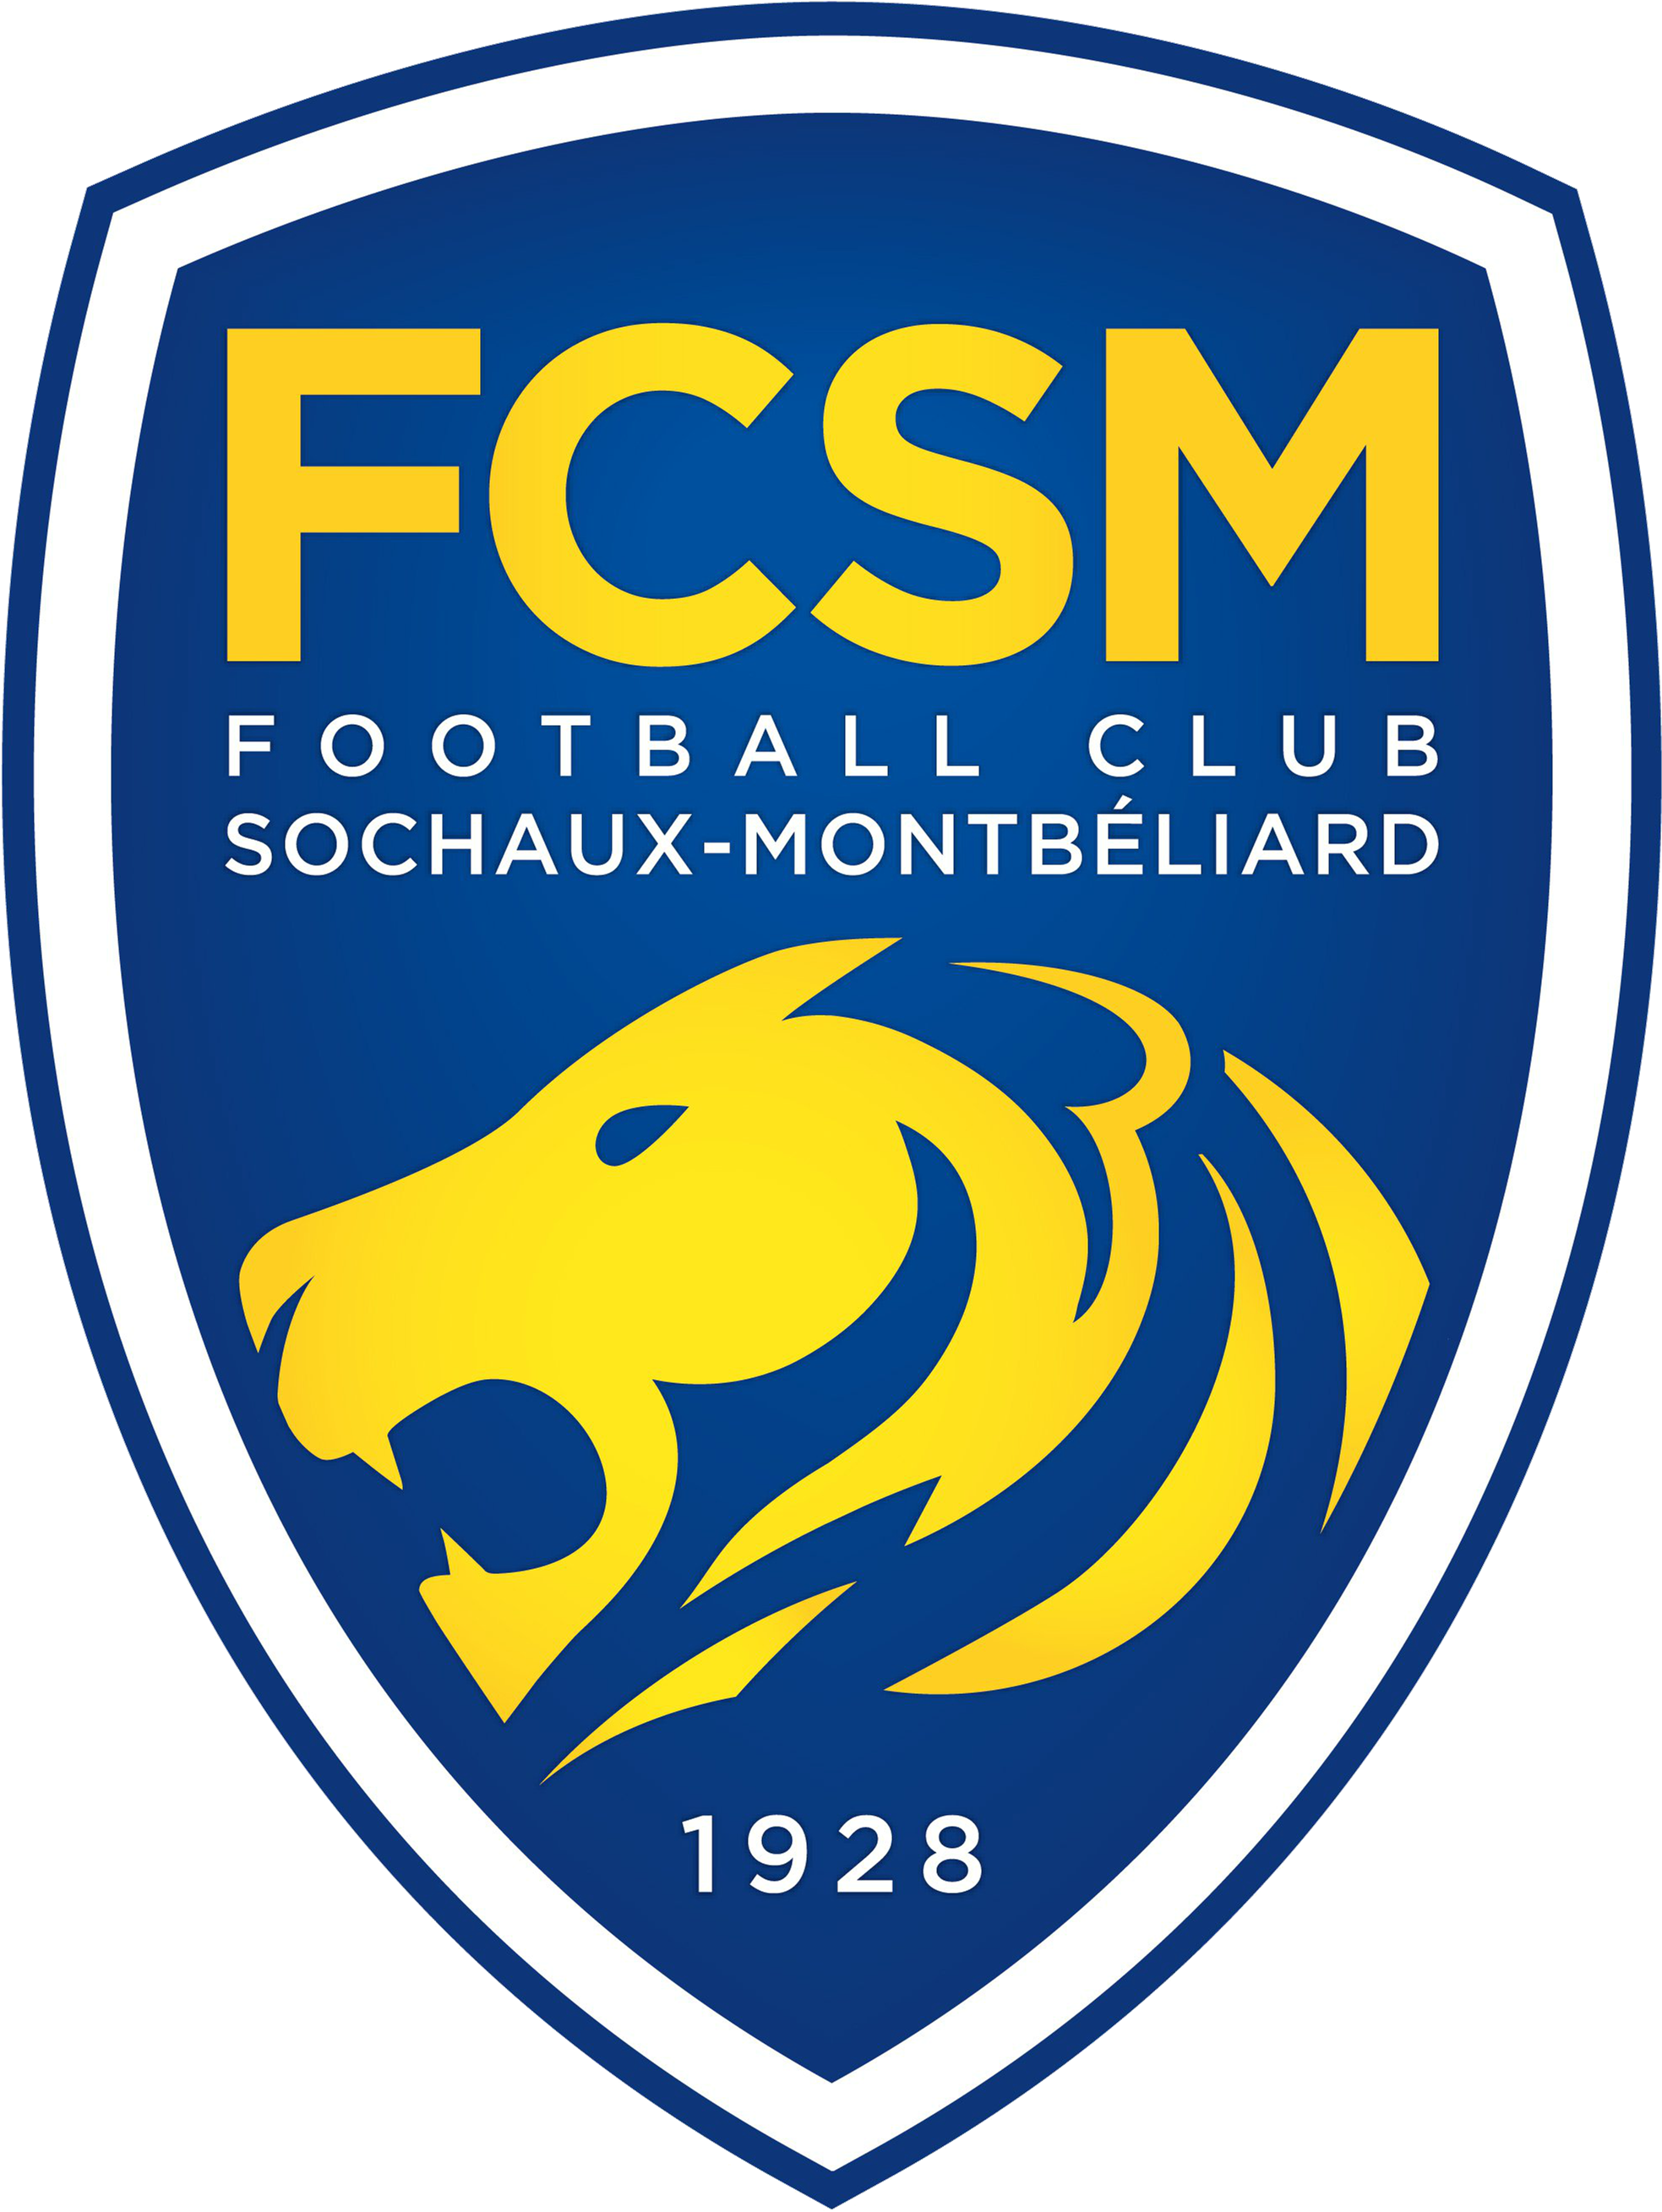 Cheap Fcsm Football Club Iron-on Embroidered Patch - Fc Sochaux Montbéliard (2000x2650)